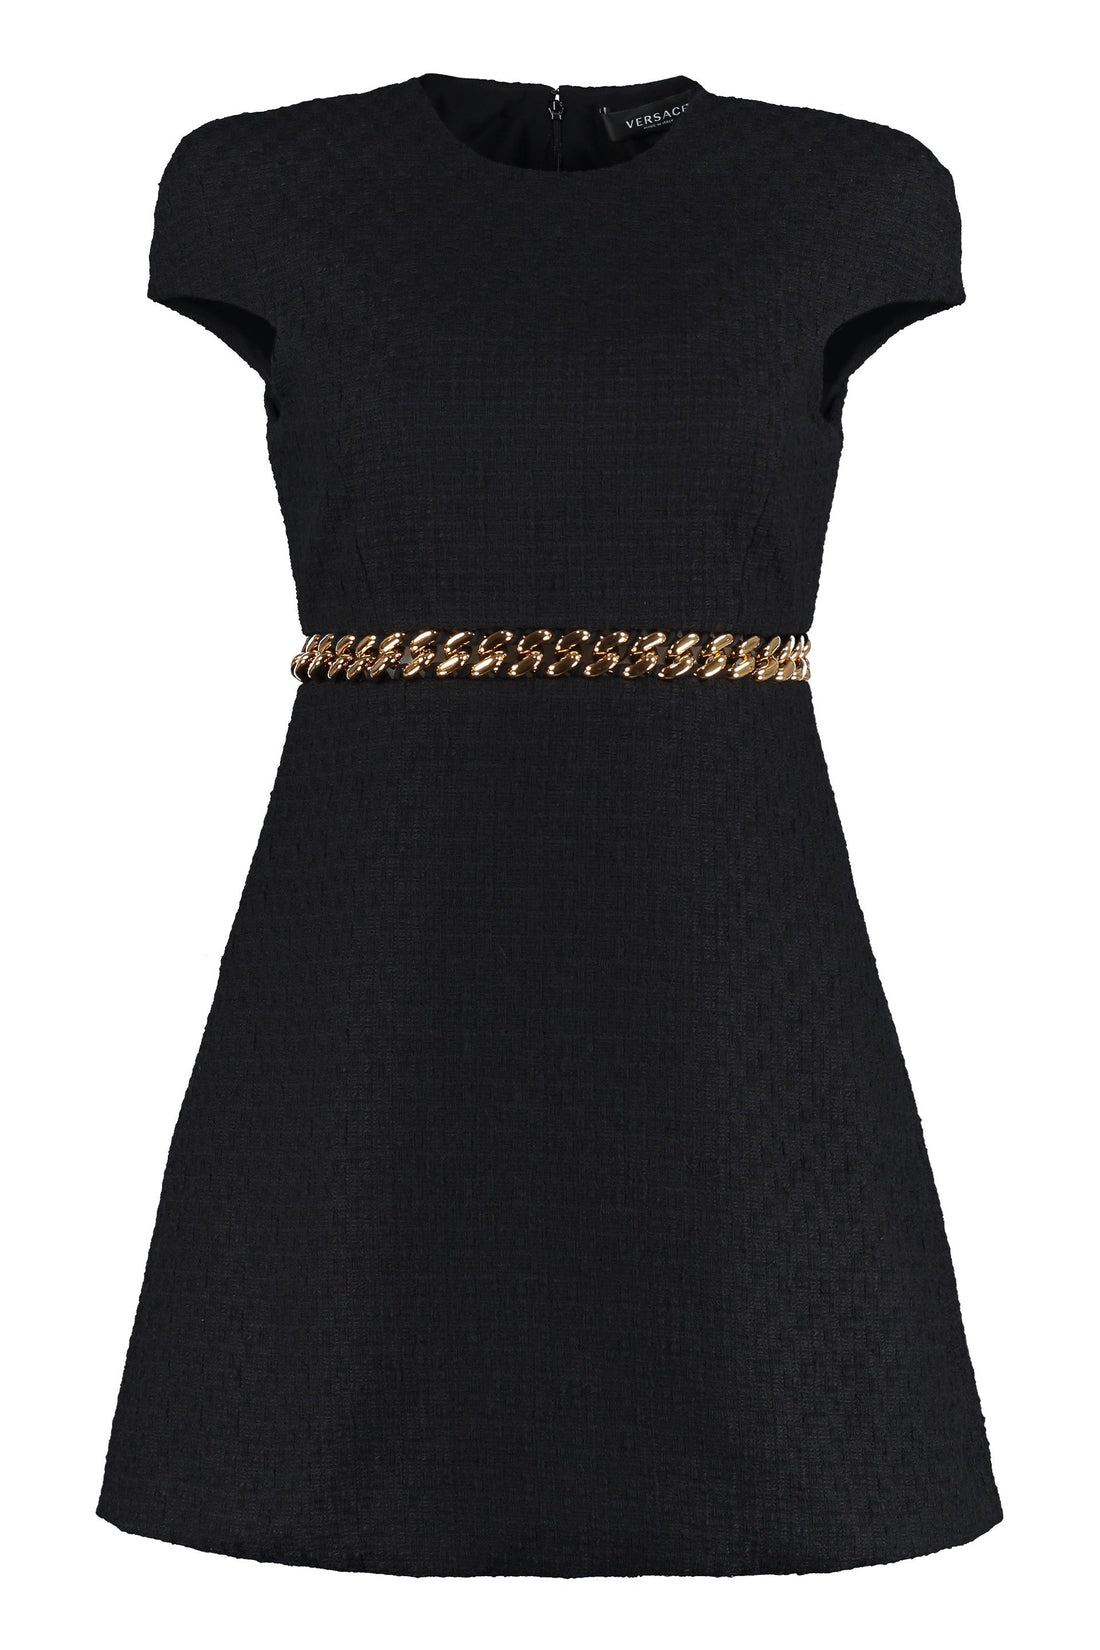 Versace-OUTLET-SALE-Tweed sheath dress-ARCHIVIST